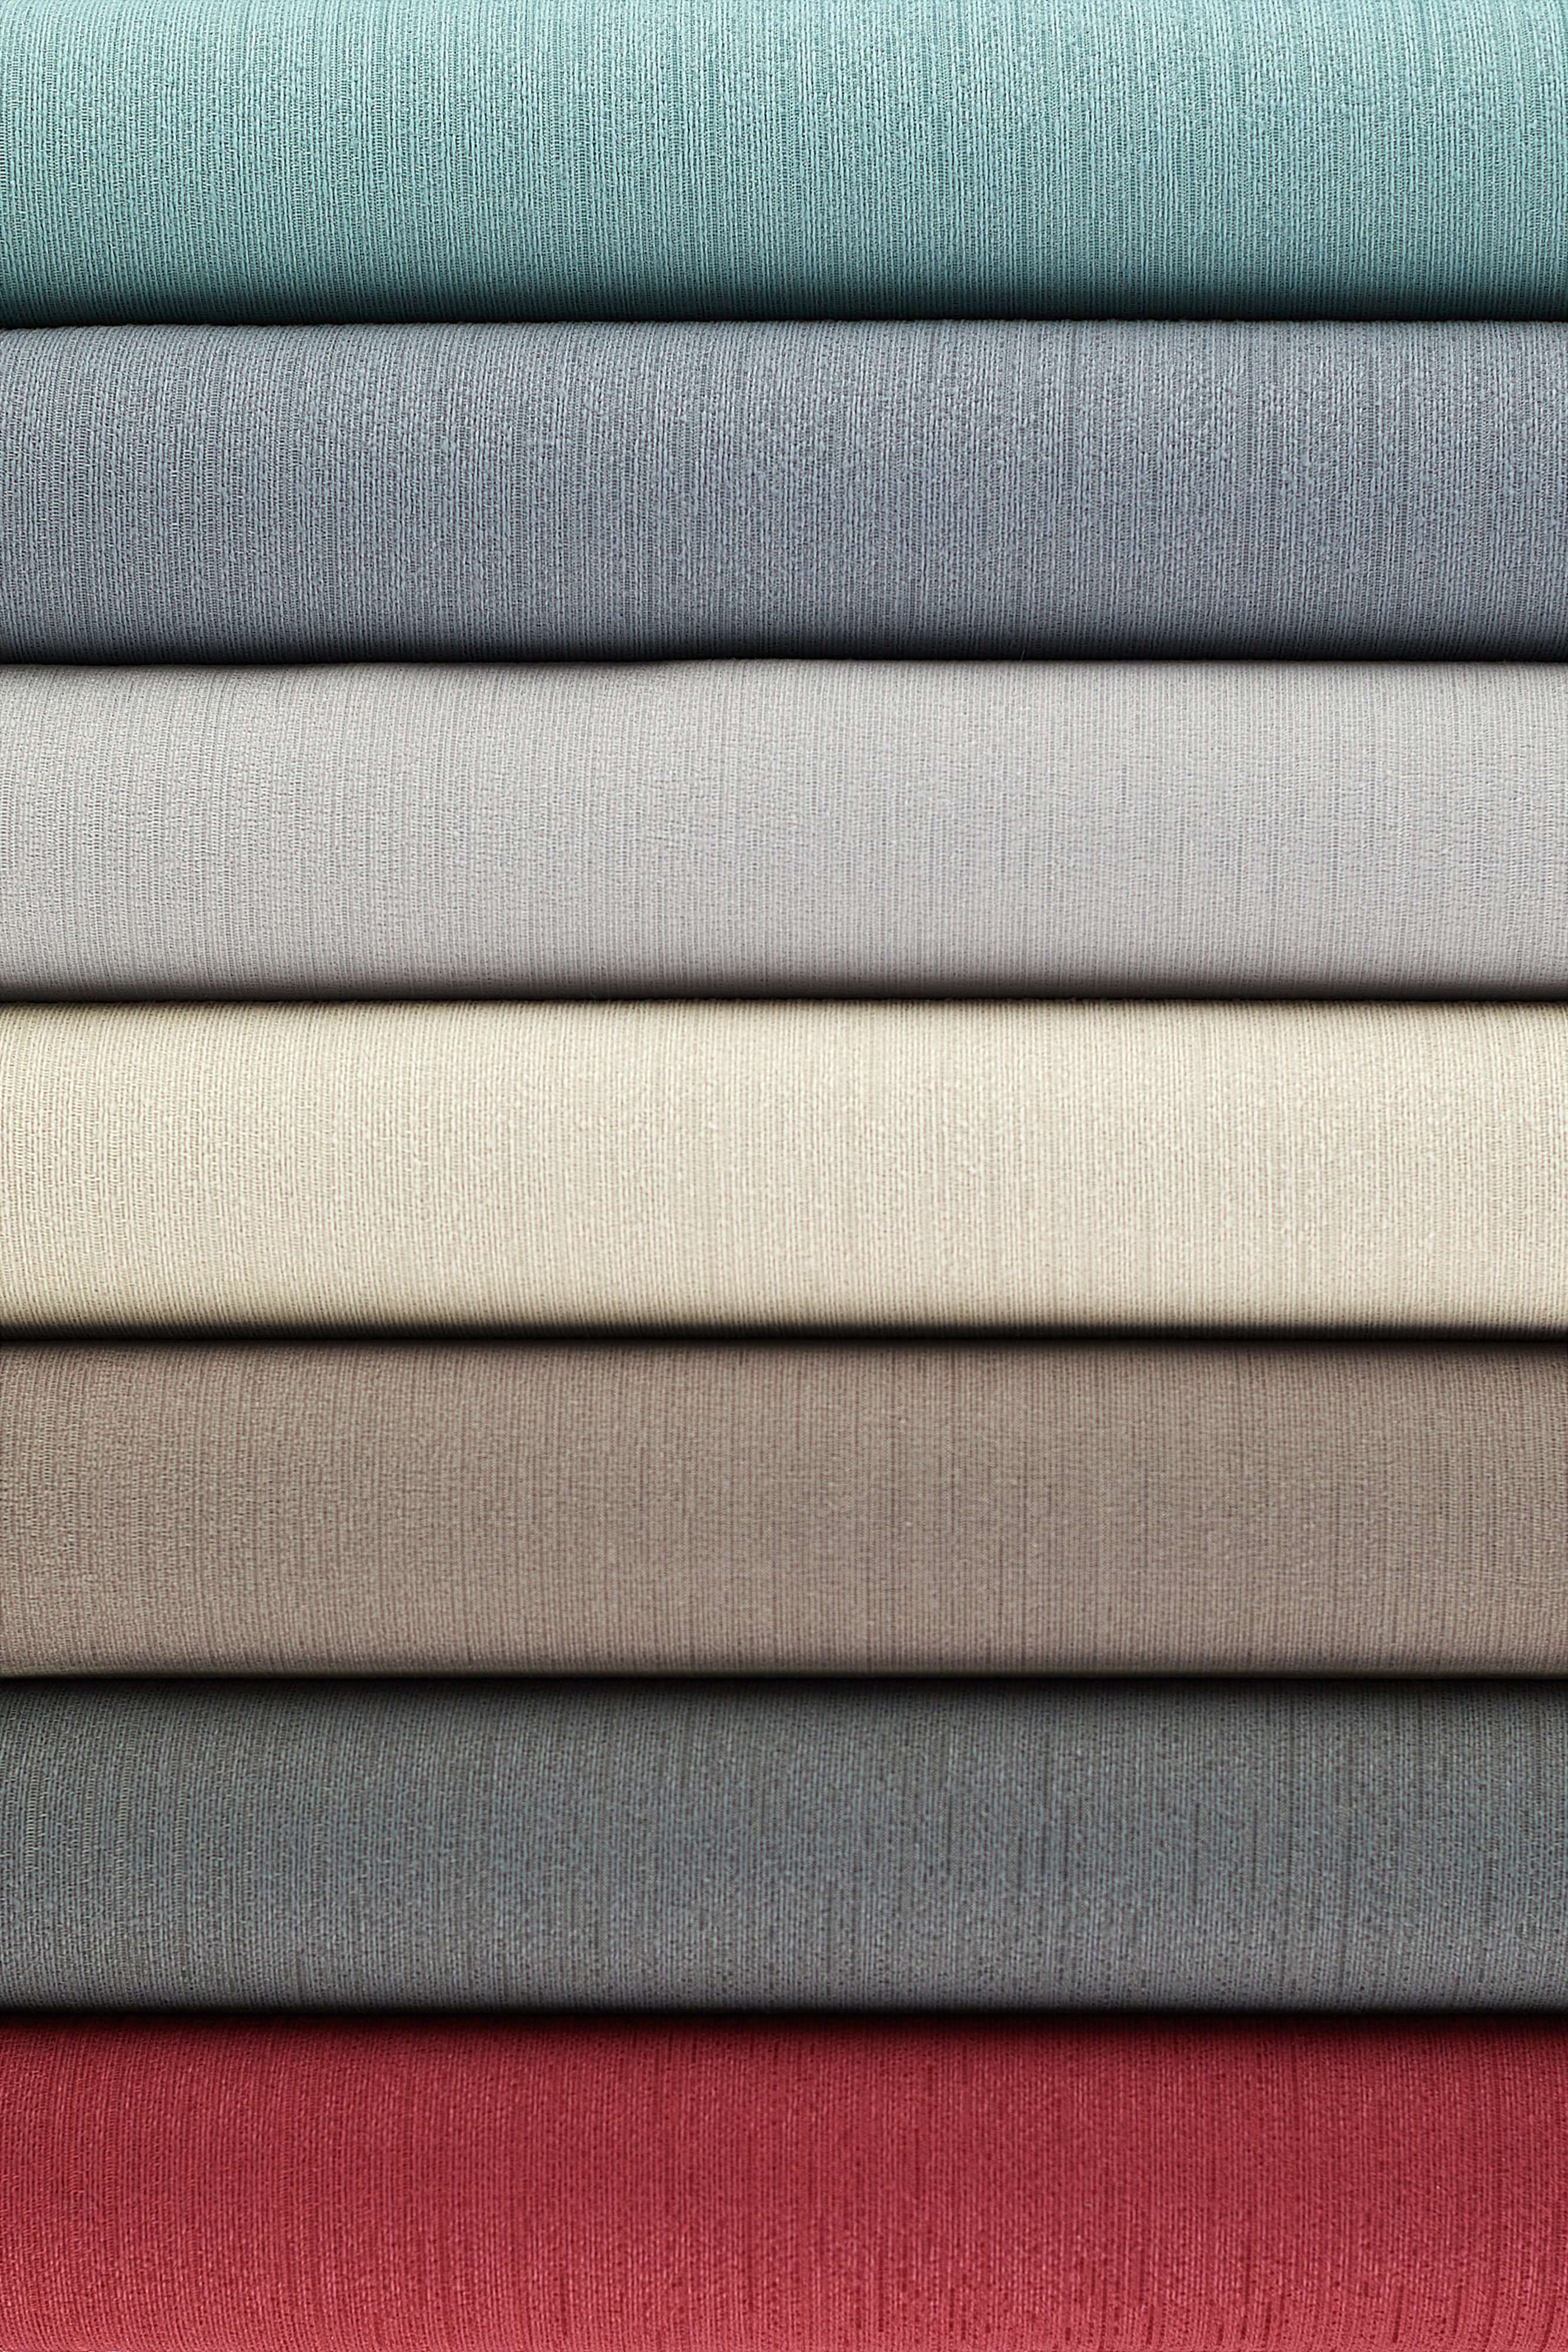 McAlister Textiles Sakai Duck Egg Blue FR Plain Fabric Fabrics 